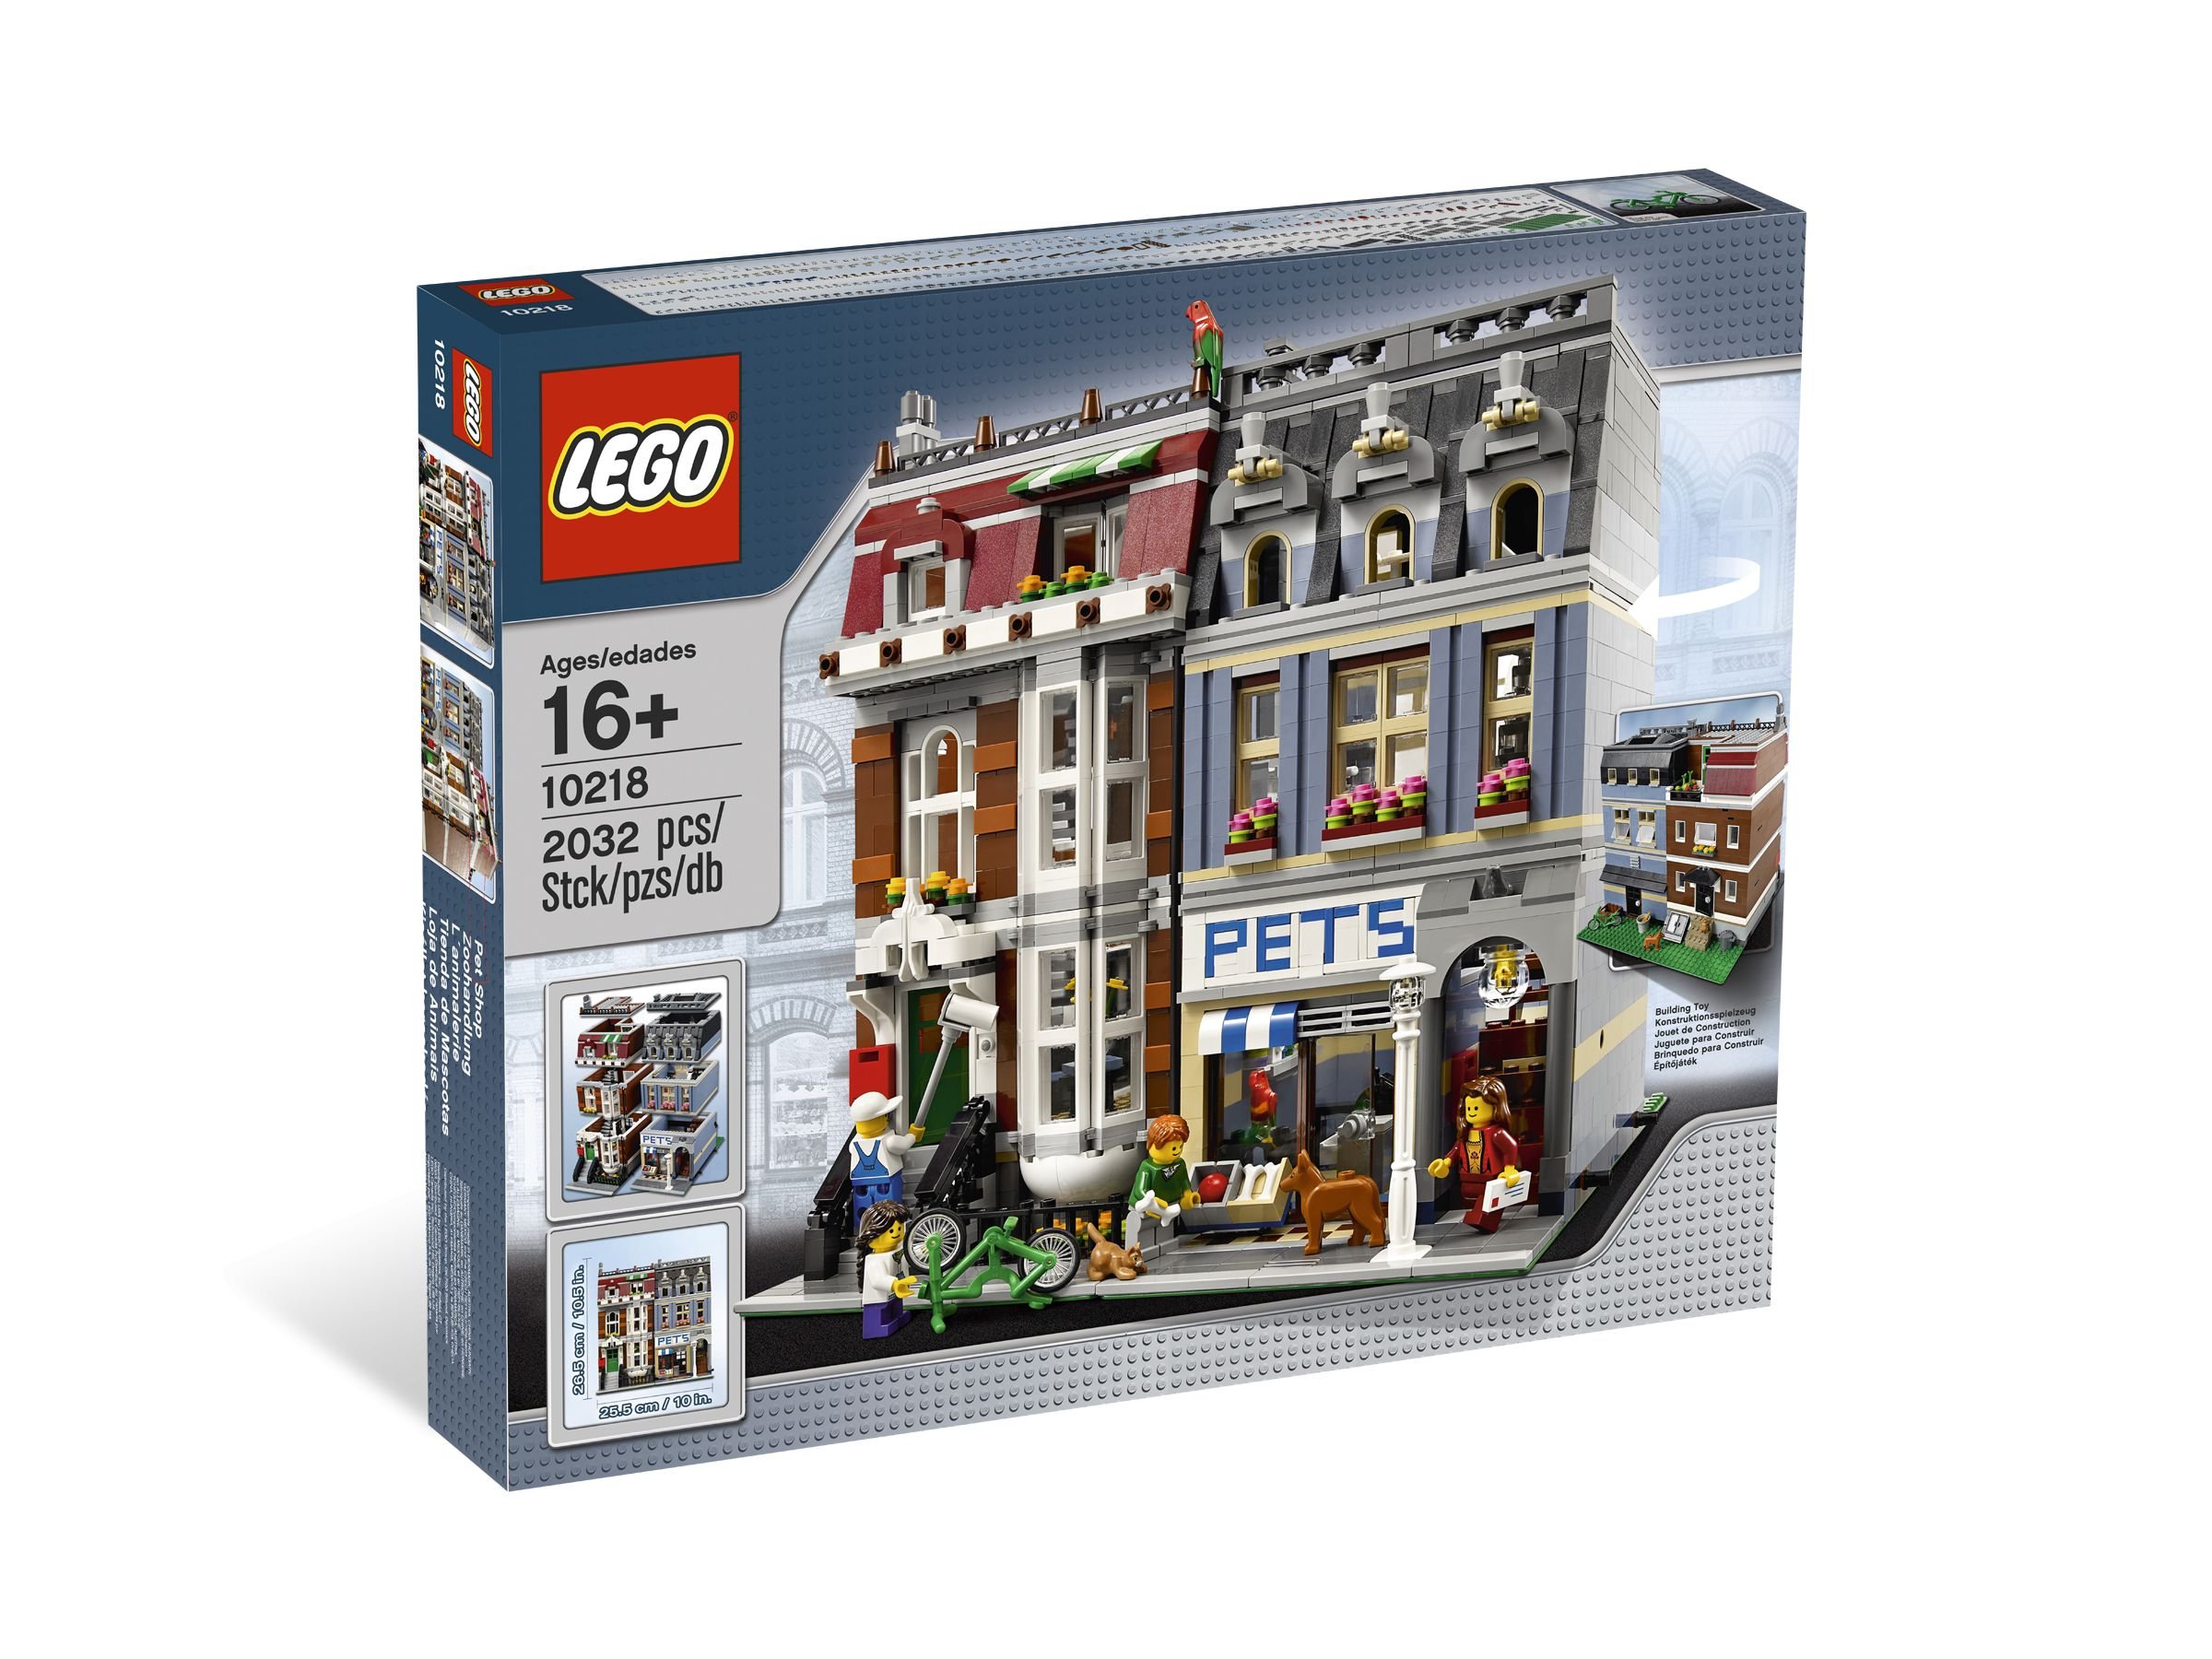 LEGO Advanced Models 10218 Zoohandlung LEGO_10218_alt1.jpg